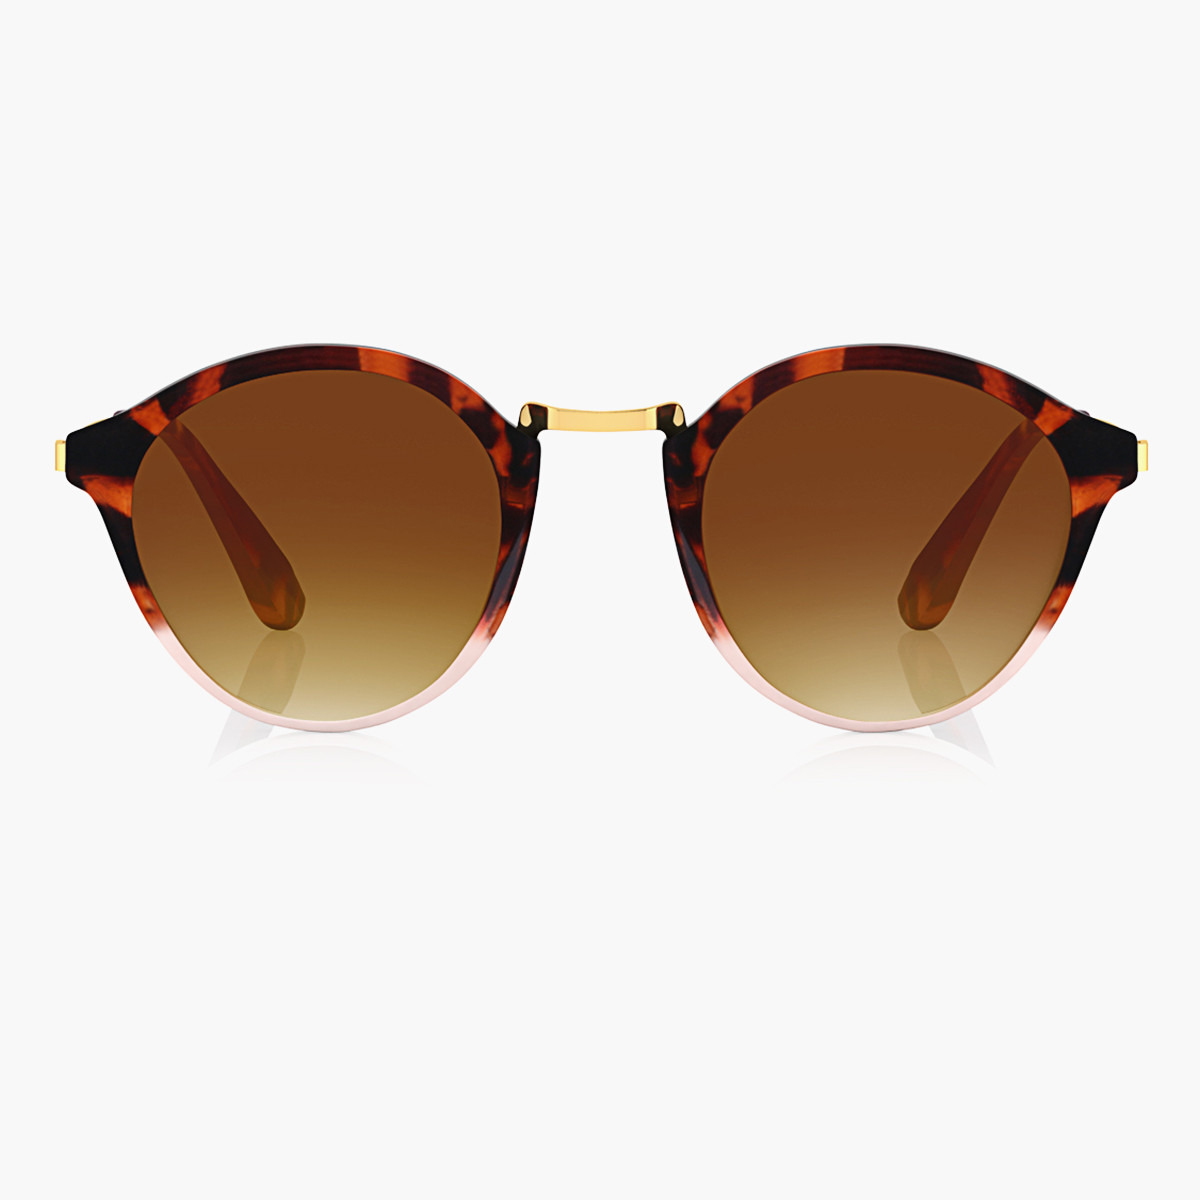 Edgar sunglasses in Caramel | TIJN